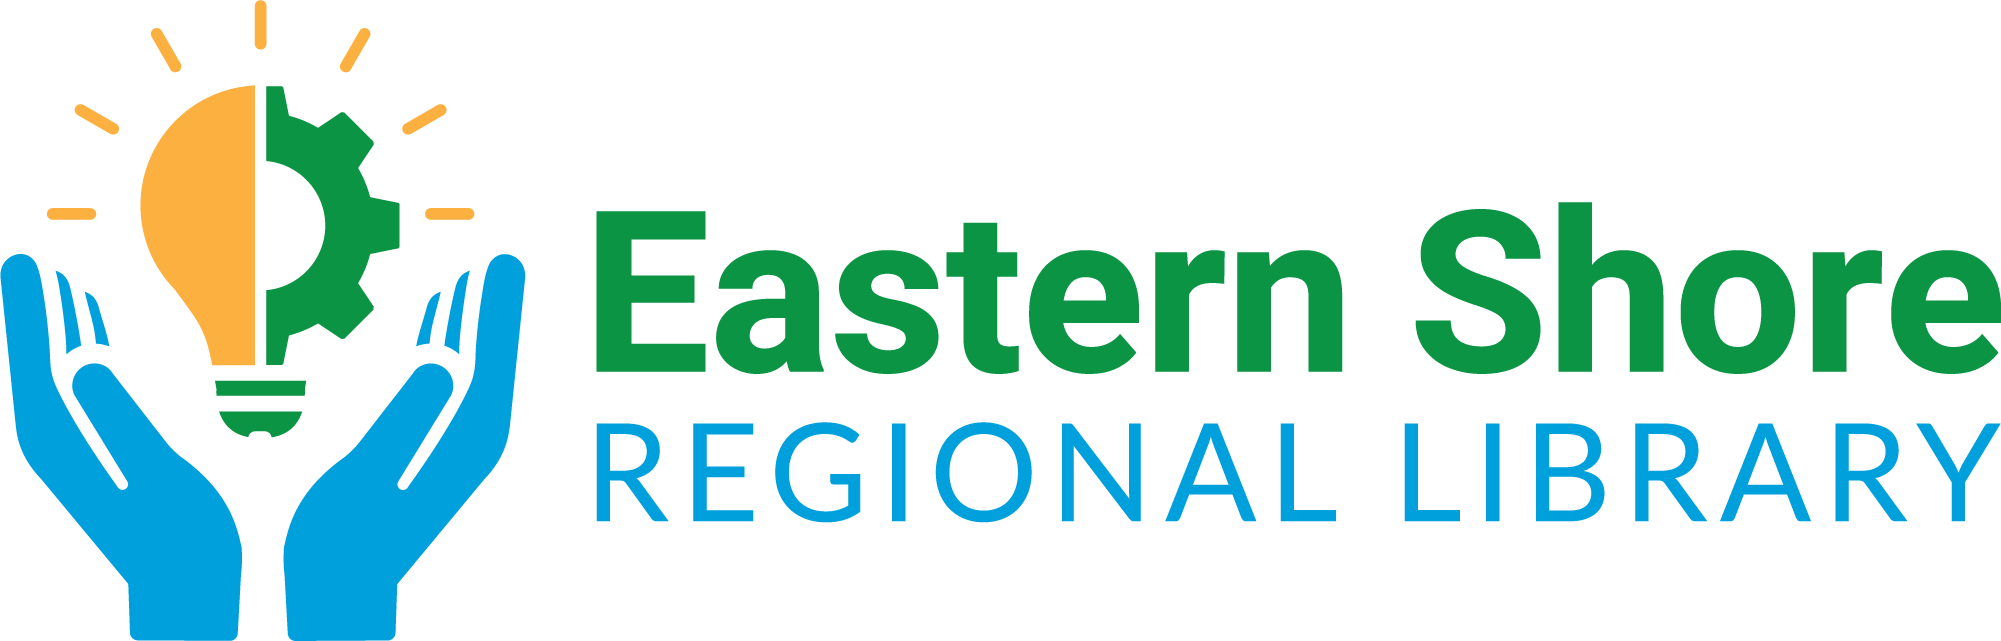 Eastern Shore Regional Library Logo